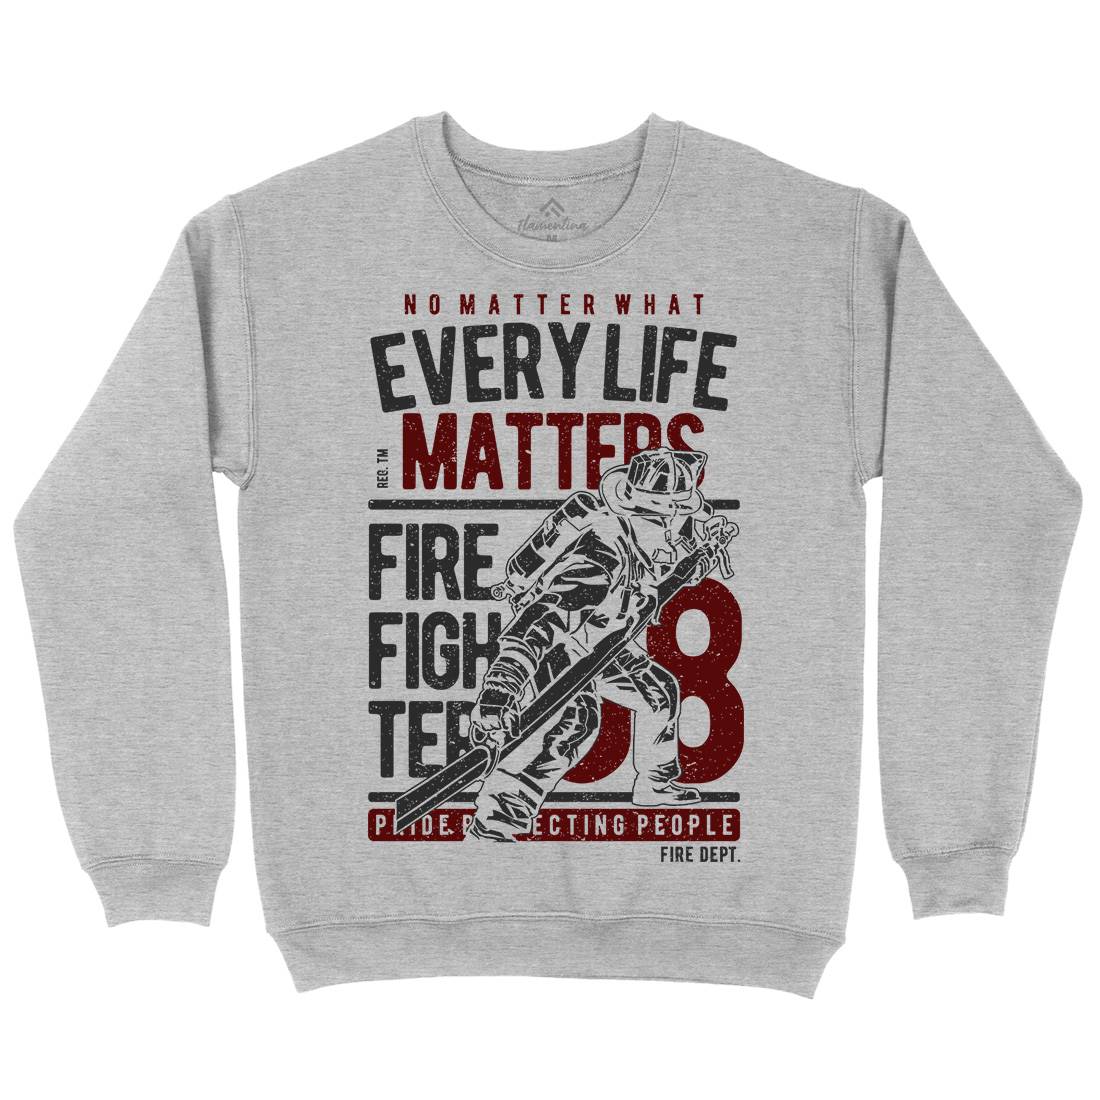 Every Life Matters Kids Crew Neck Sweatshirt Firefighters A650